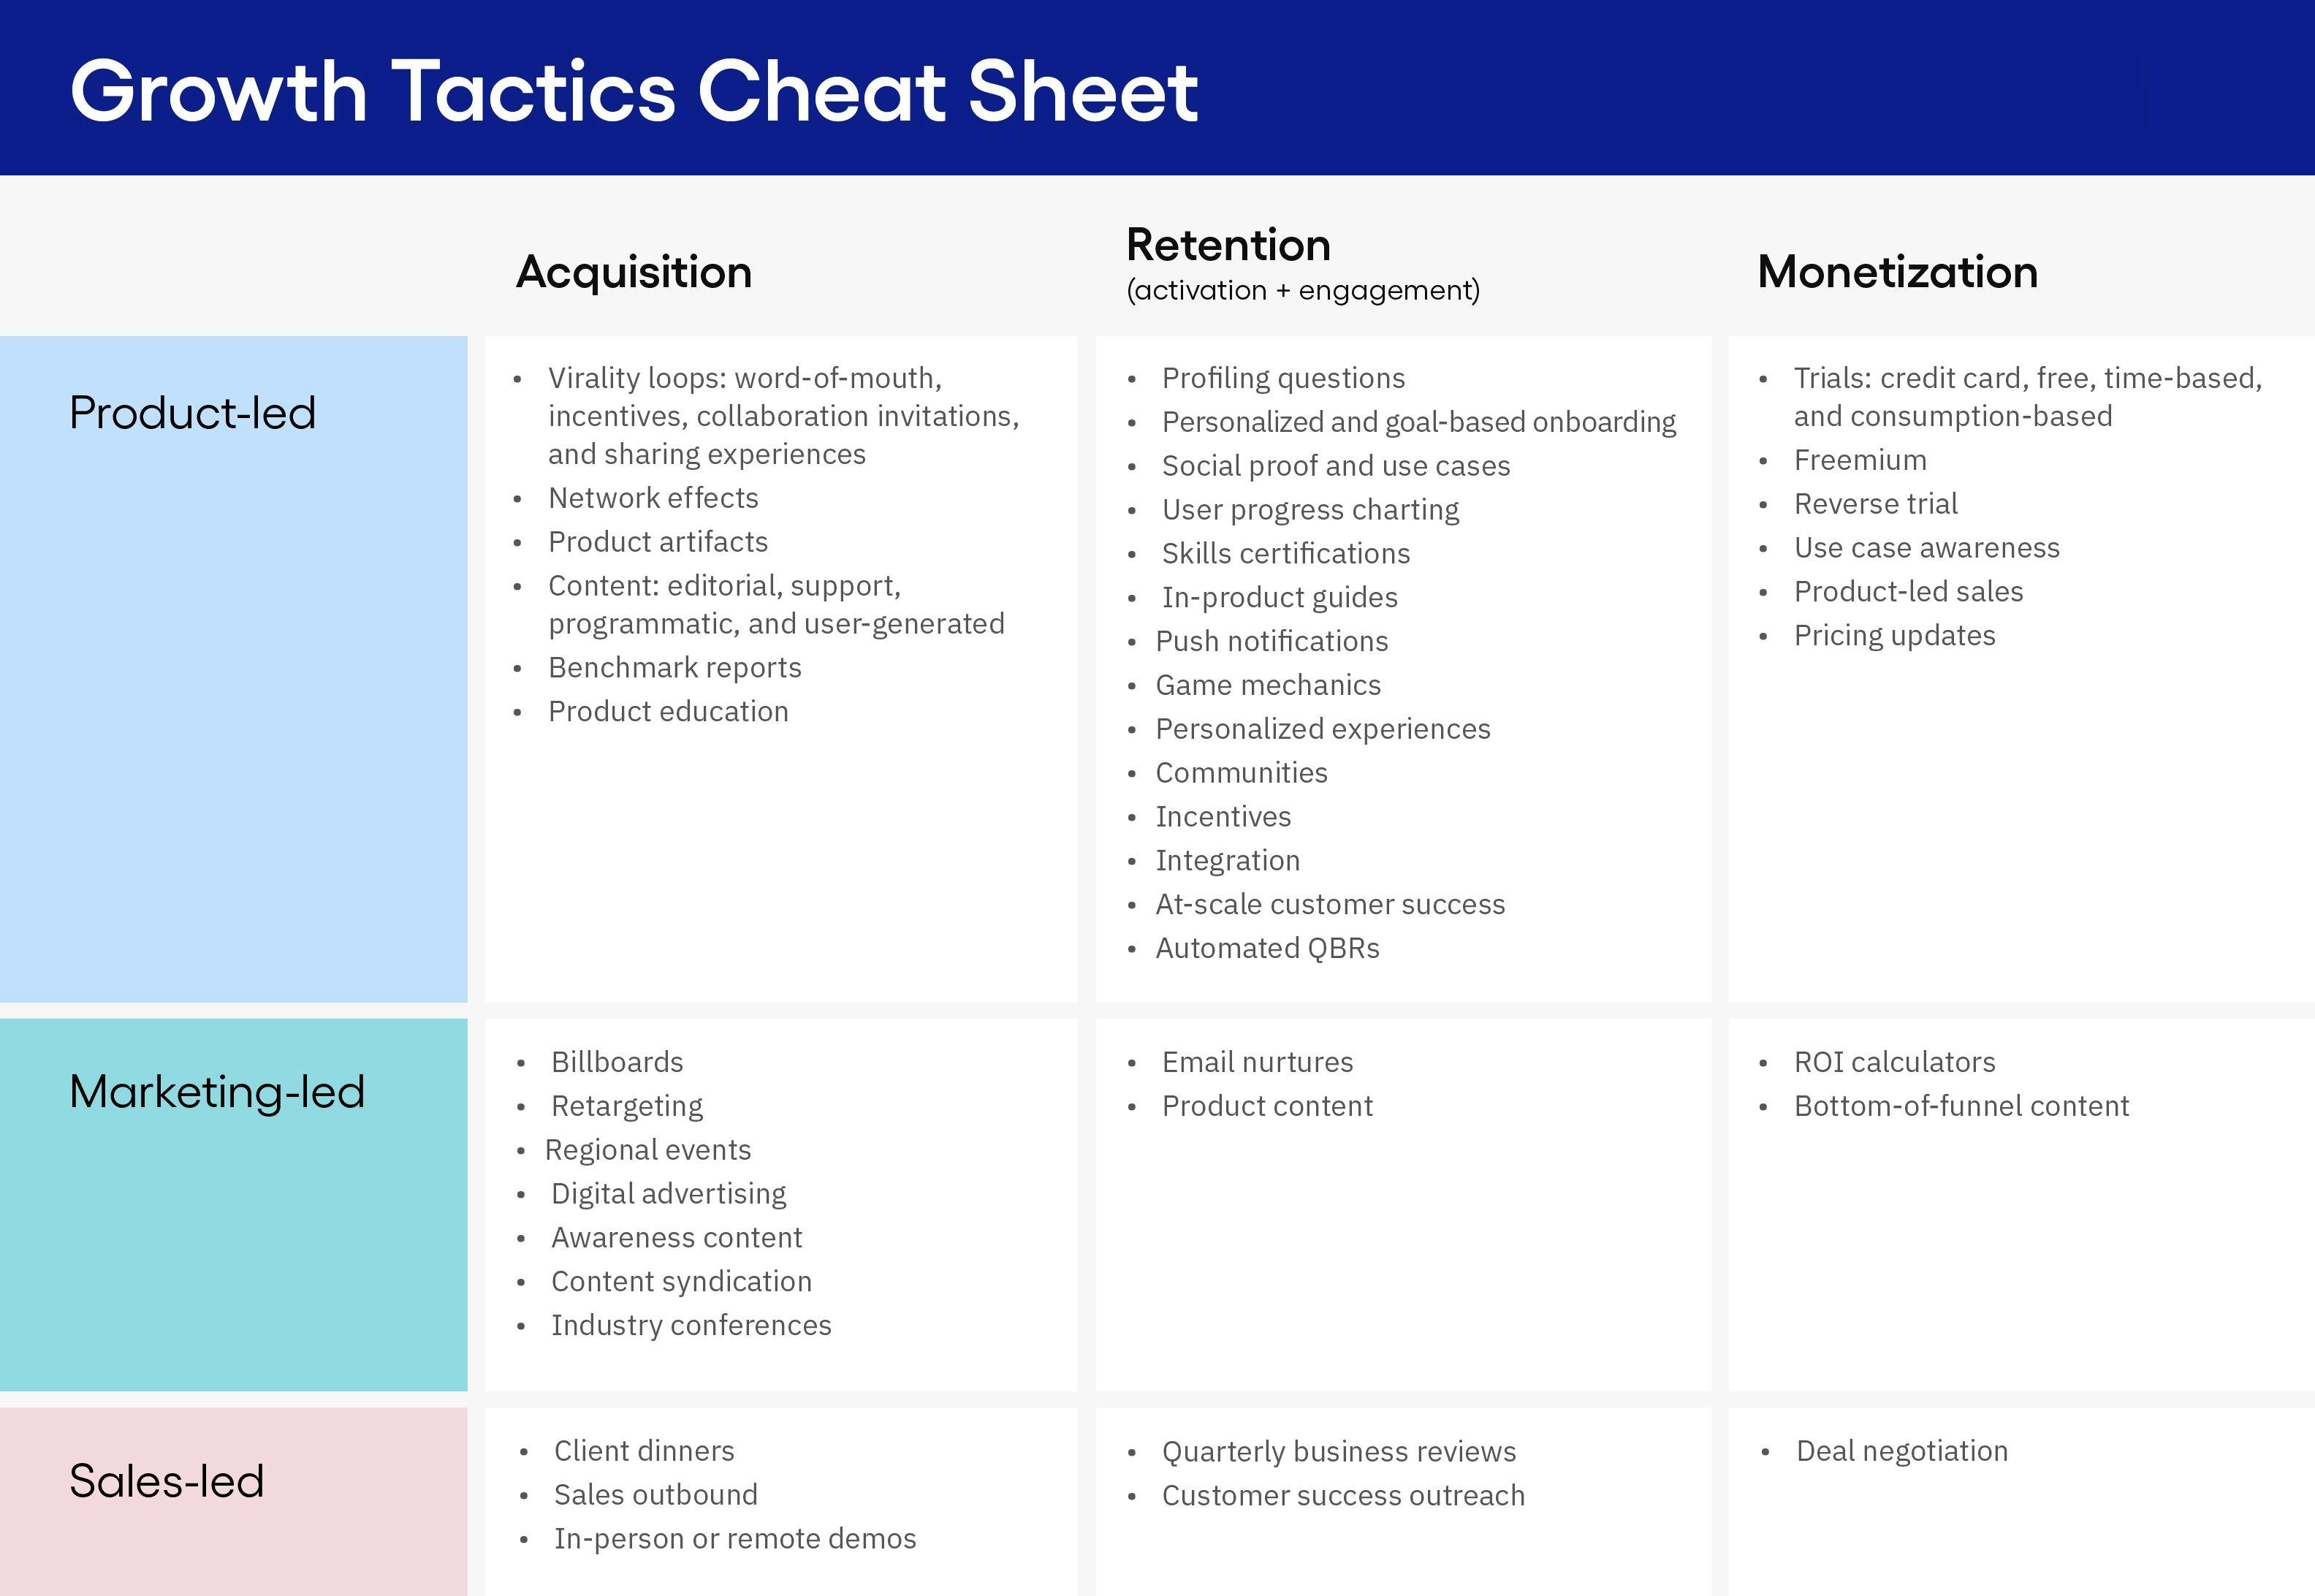 Cheat sheet of product-led, marketing-led, and sales-led tactics